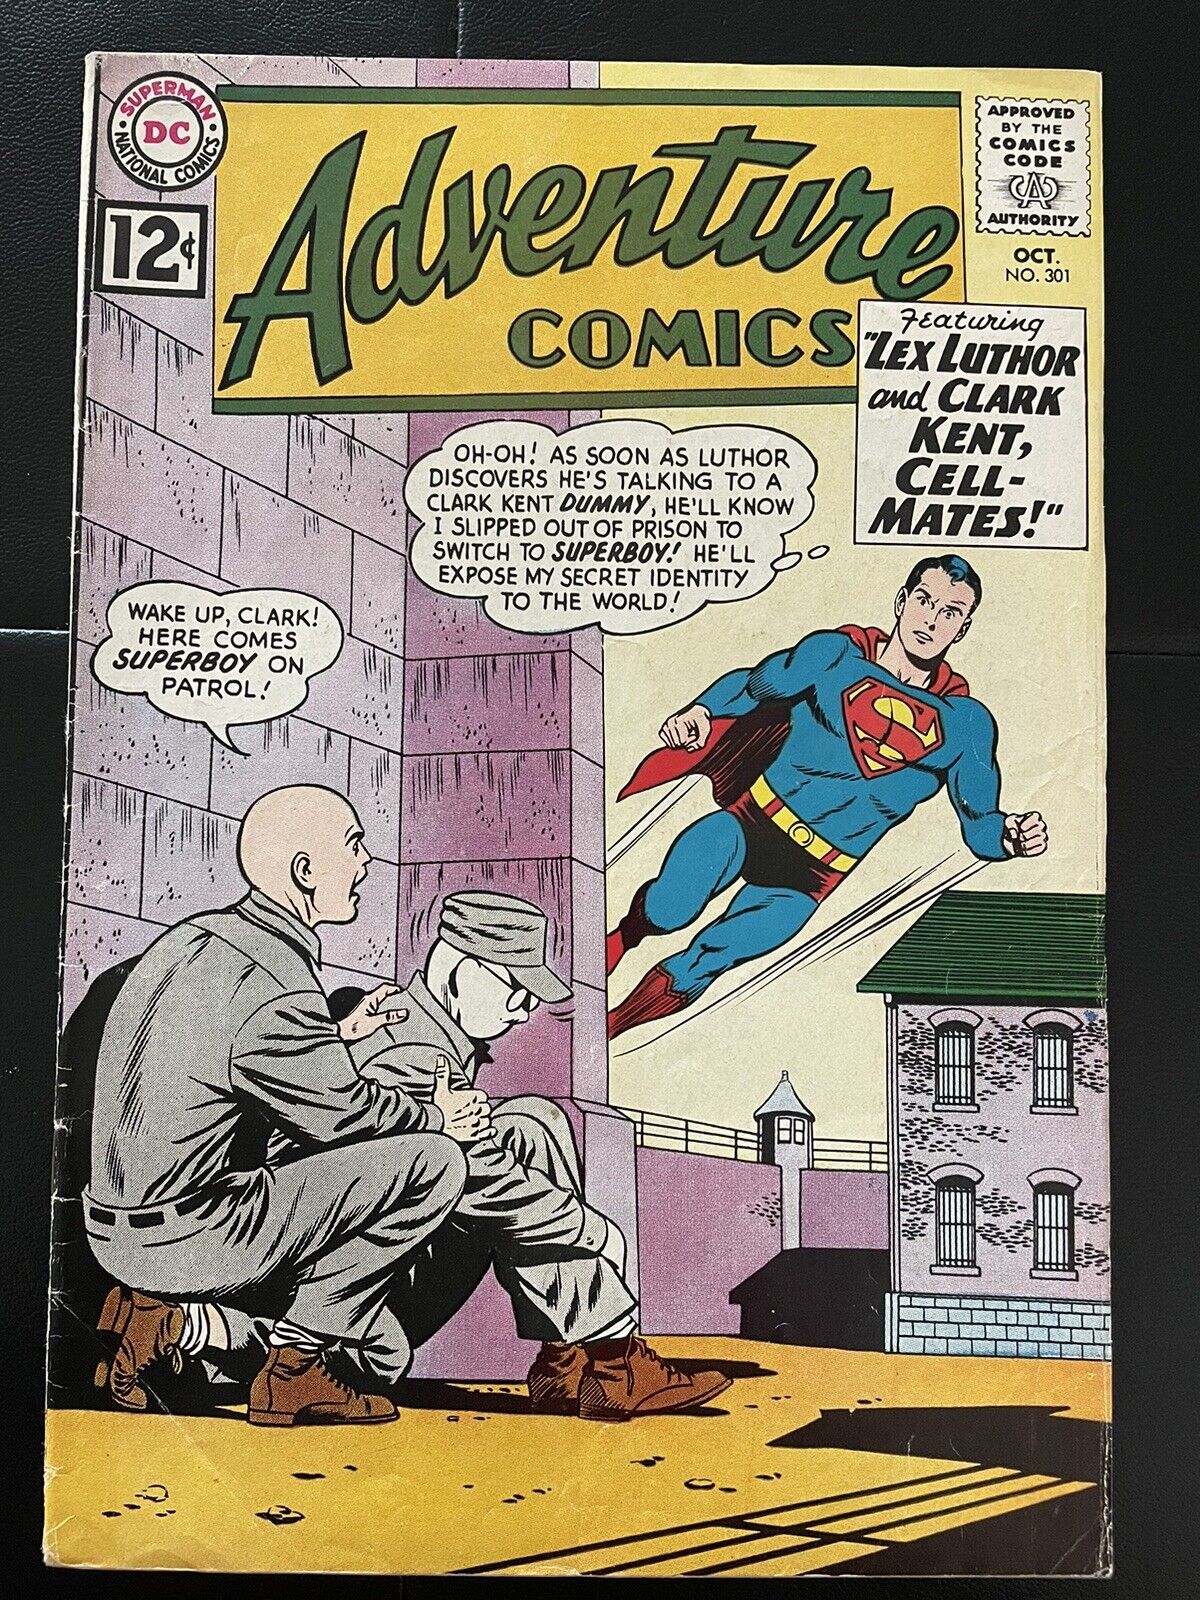 Adventure Comics #301 - Near Mint - October 1962